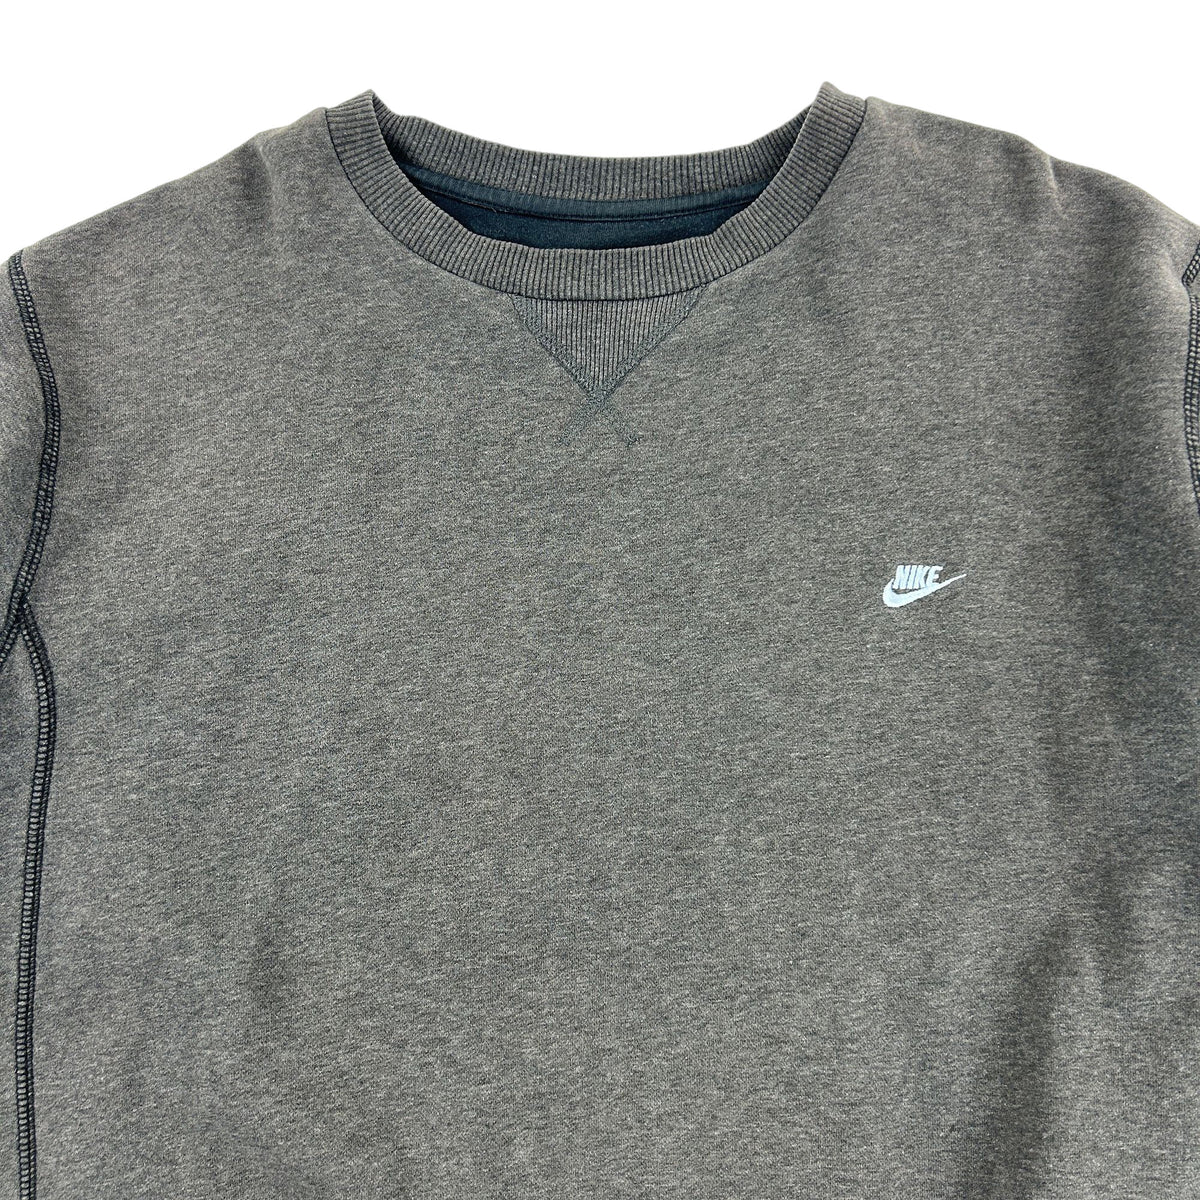 Nike Sweatshirt Size XL